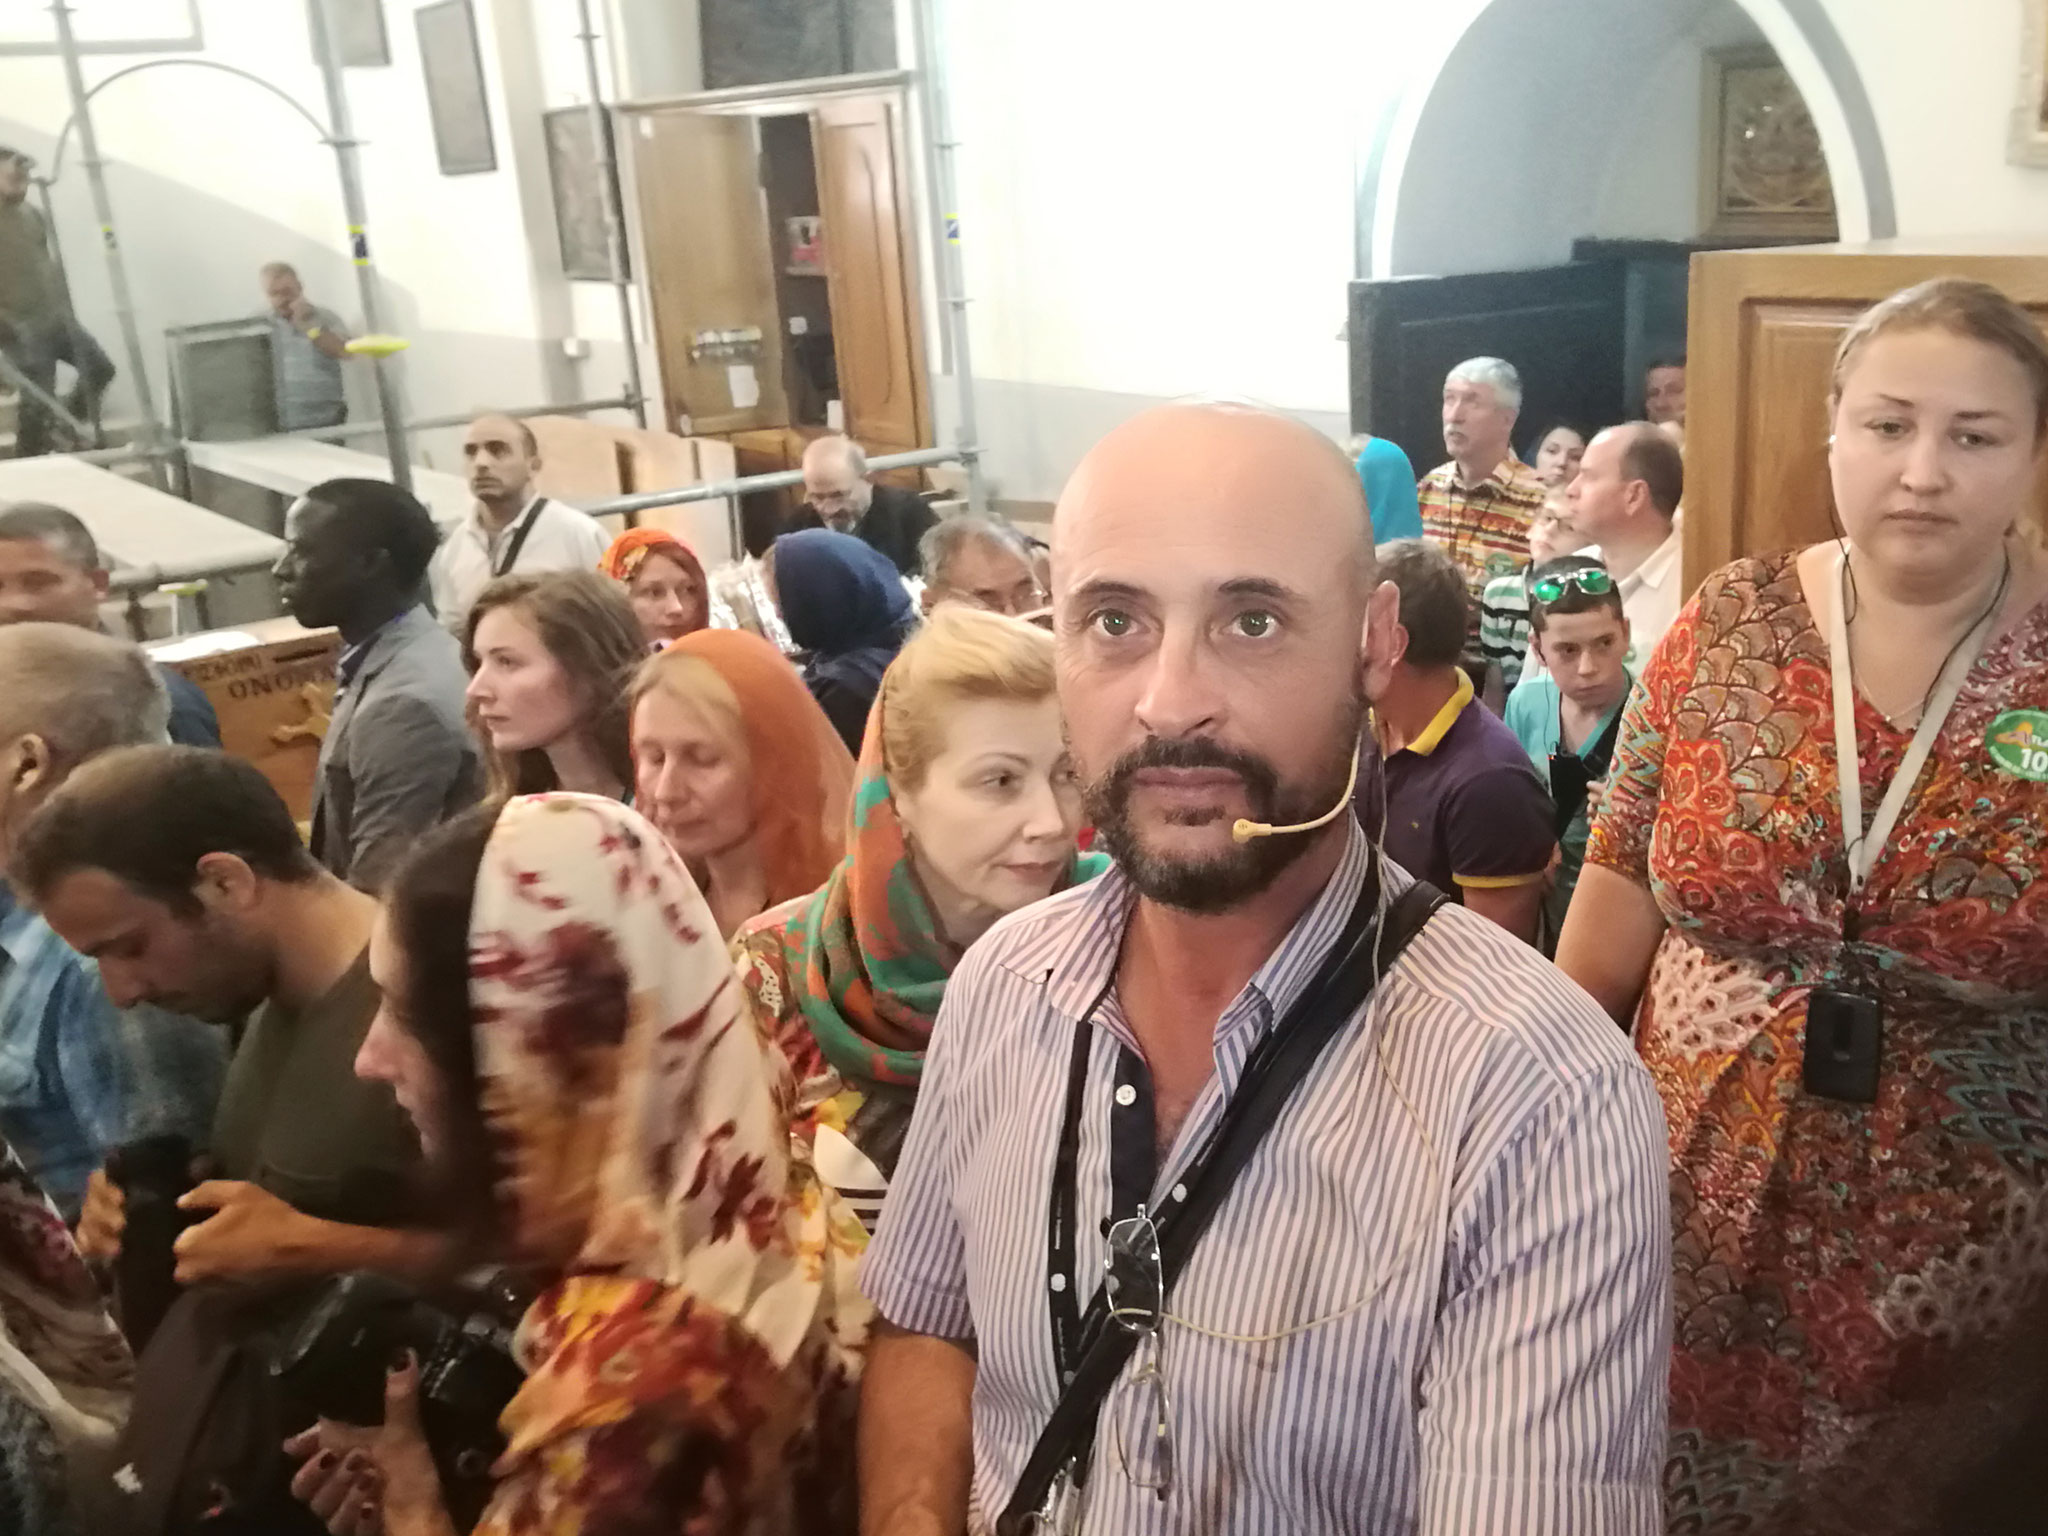 Crowds of pilgrims at the Nativity Church, Bethlehem, 2018